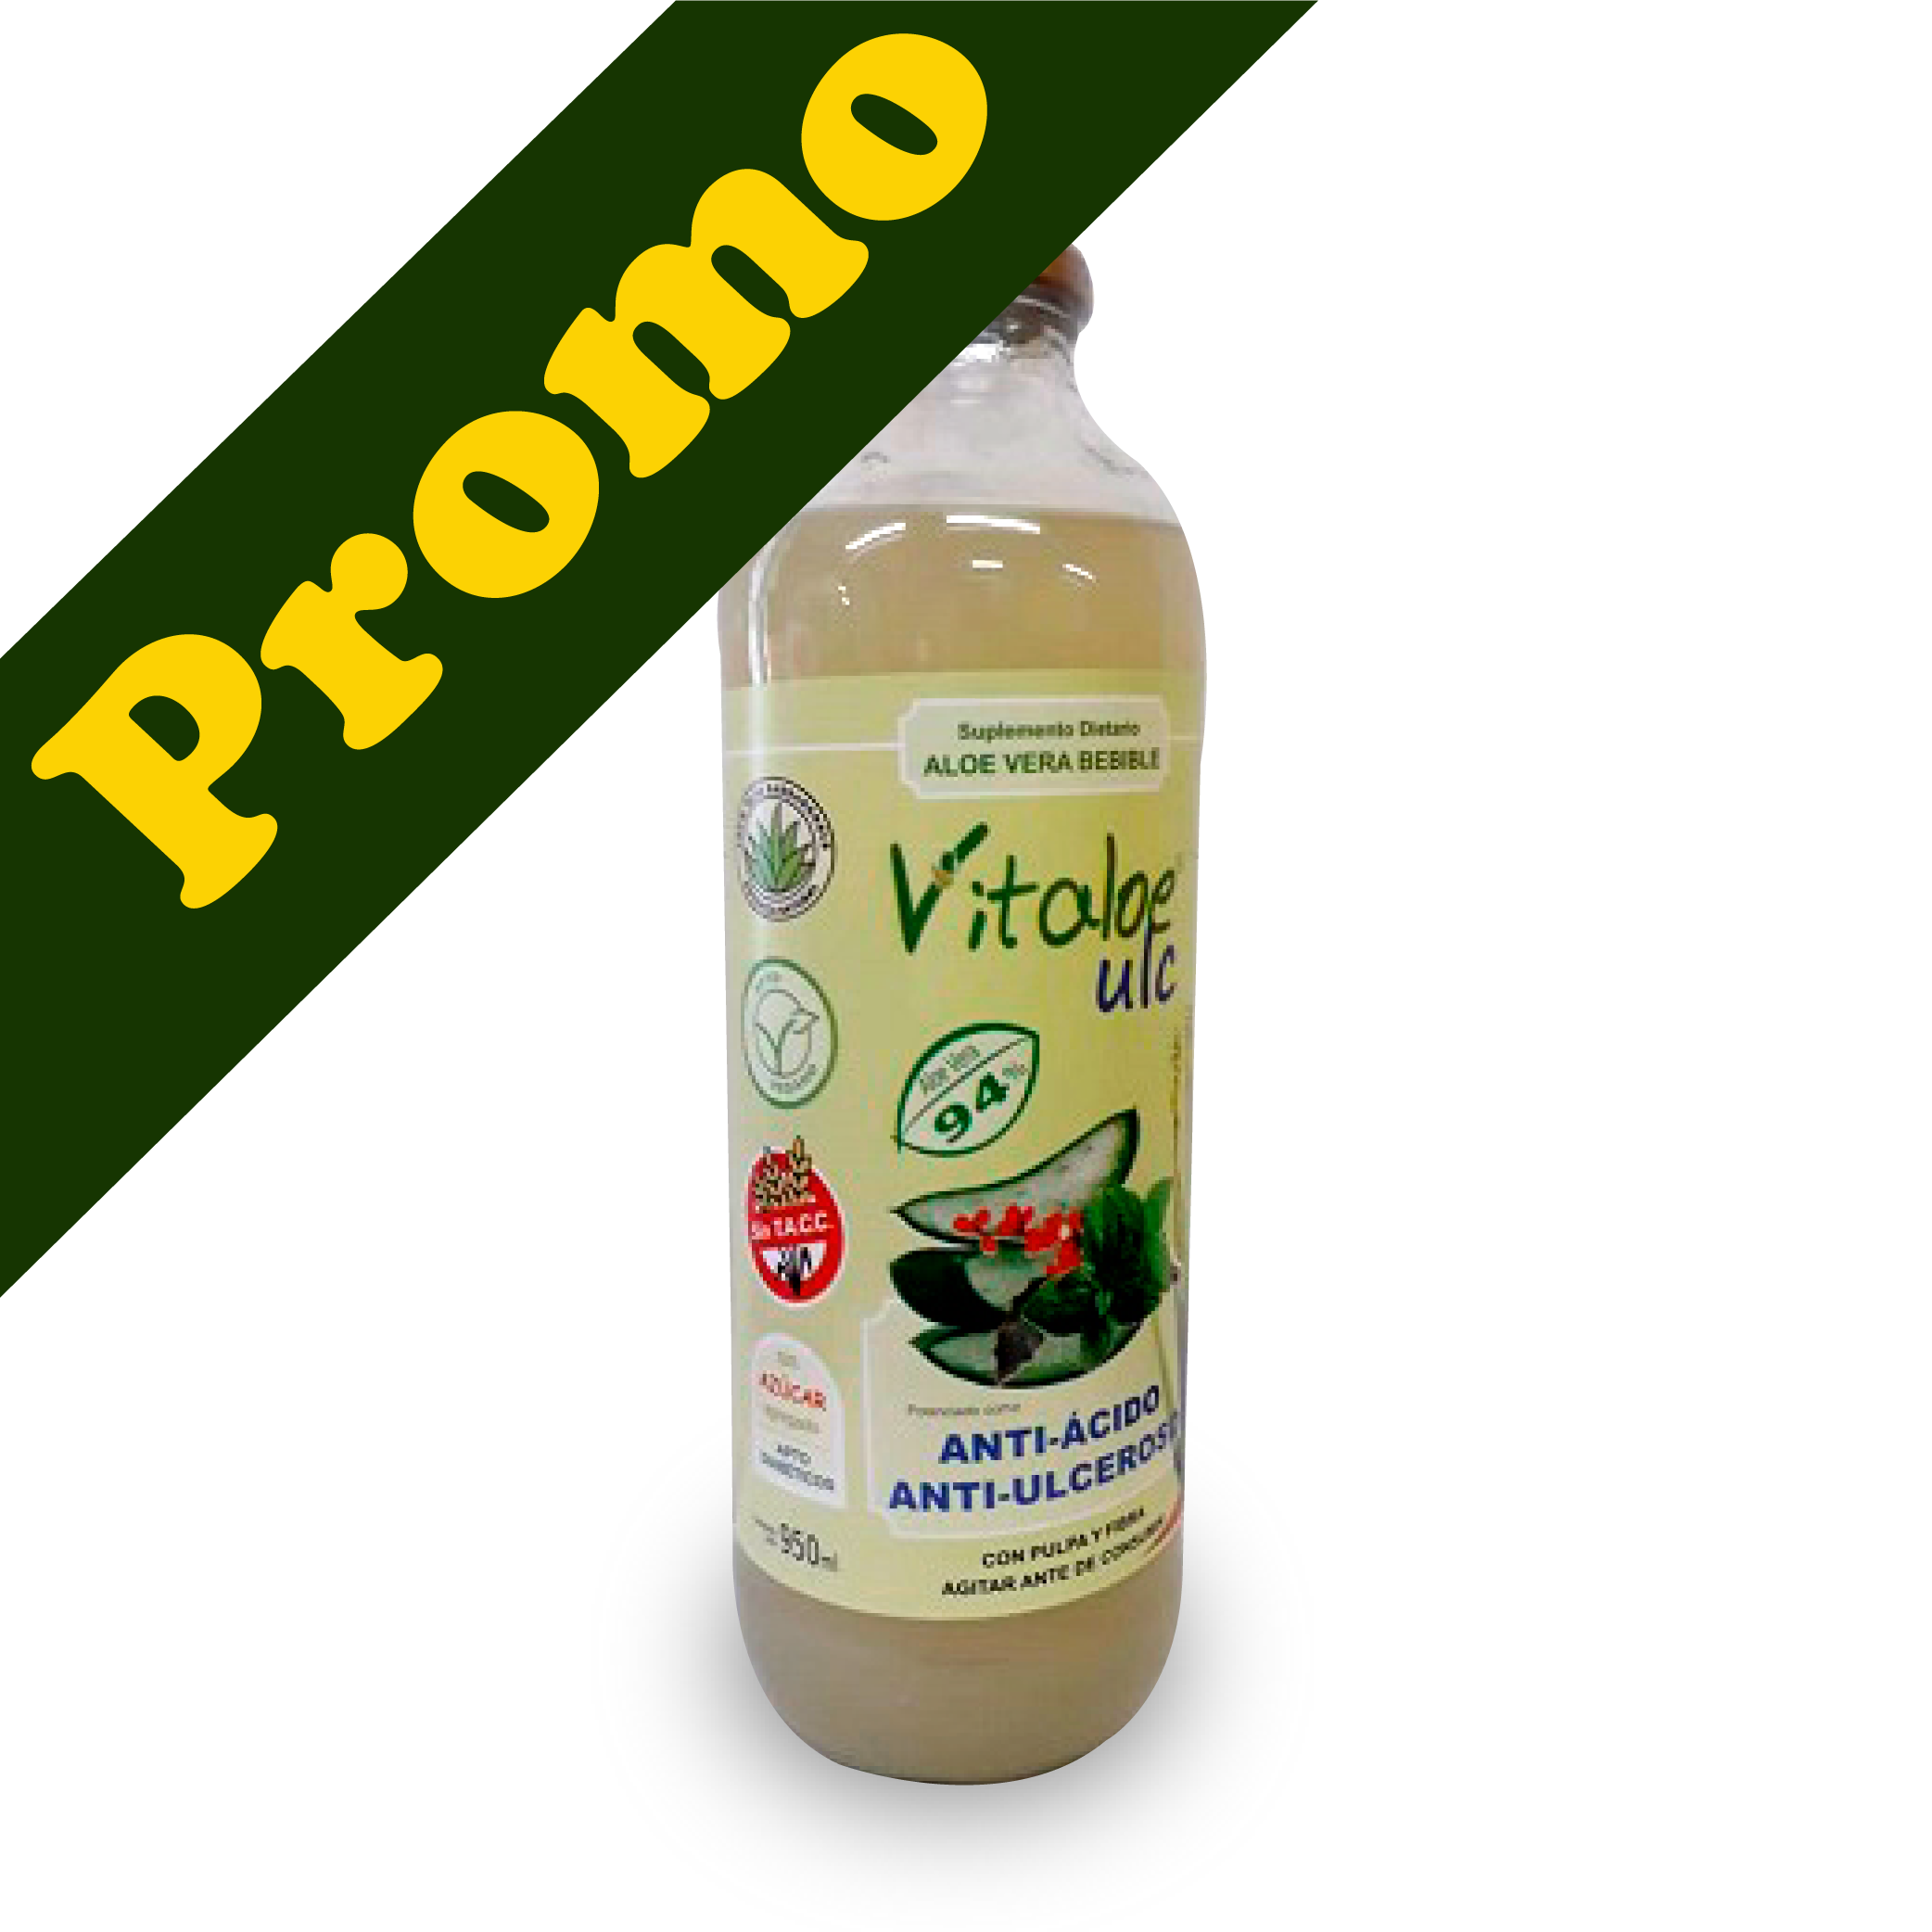 Vitaloe Ulc Jugo de Aloe Vera con Antiacidos y Antiulceroso  x 950 ml PROMO JUNIO